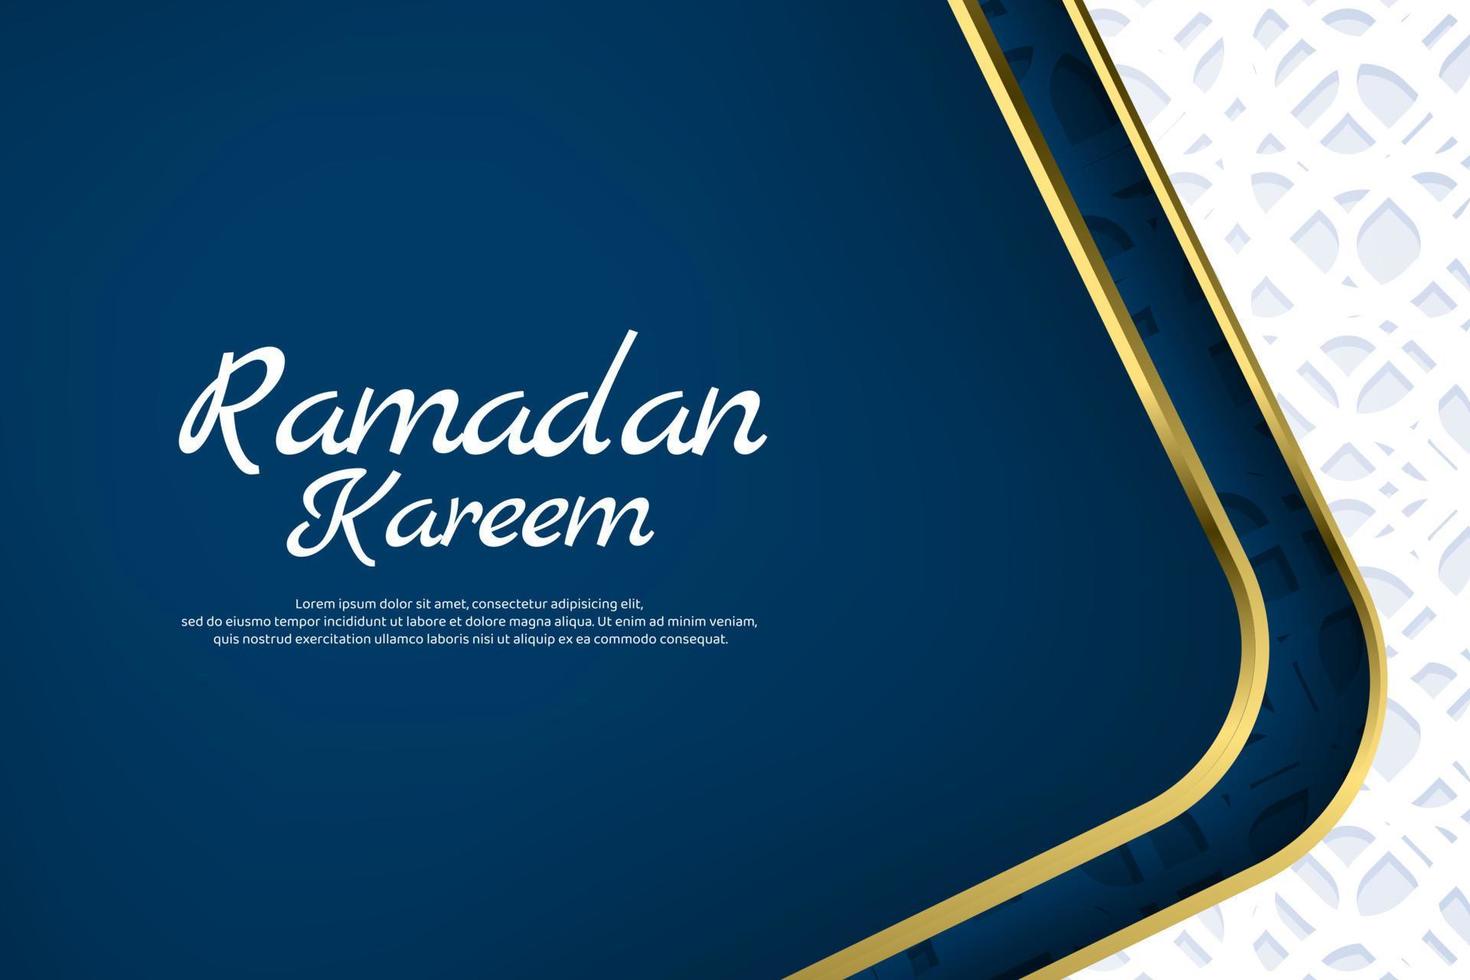 Luxury islamic decorative background with arabesque pattern vector illustration